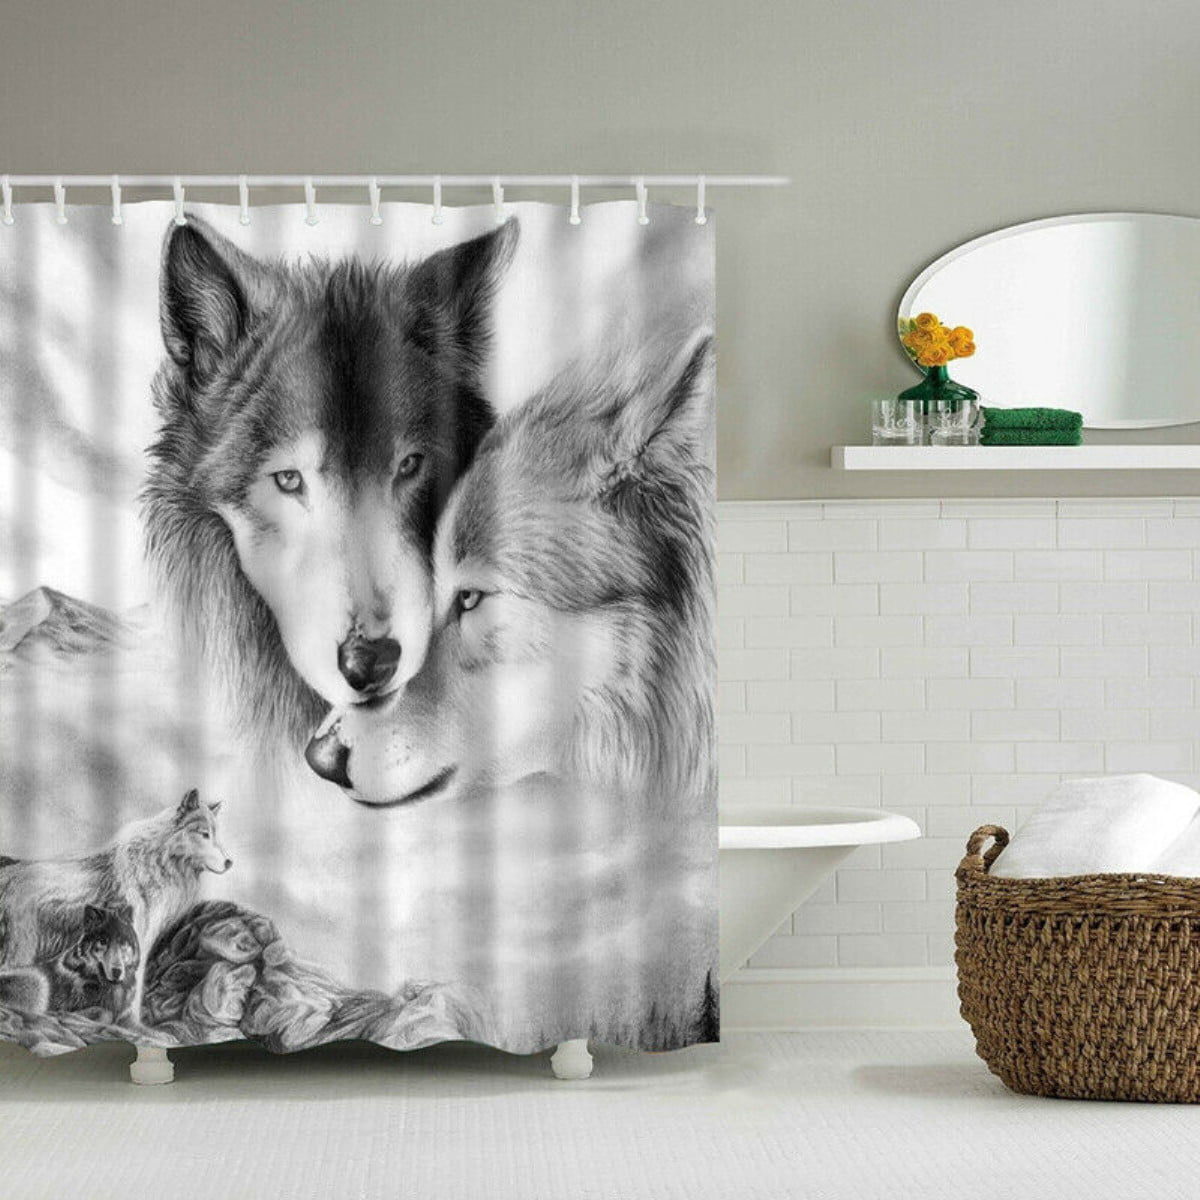 Snow night wolf Bathroom Shower Curtain Waterproof Fabric Drapes & 12hooks 71in 